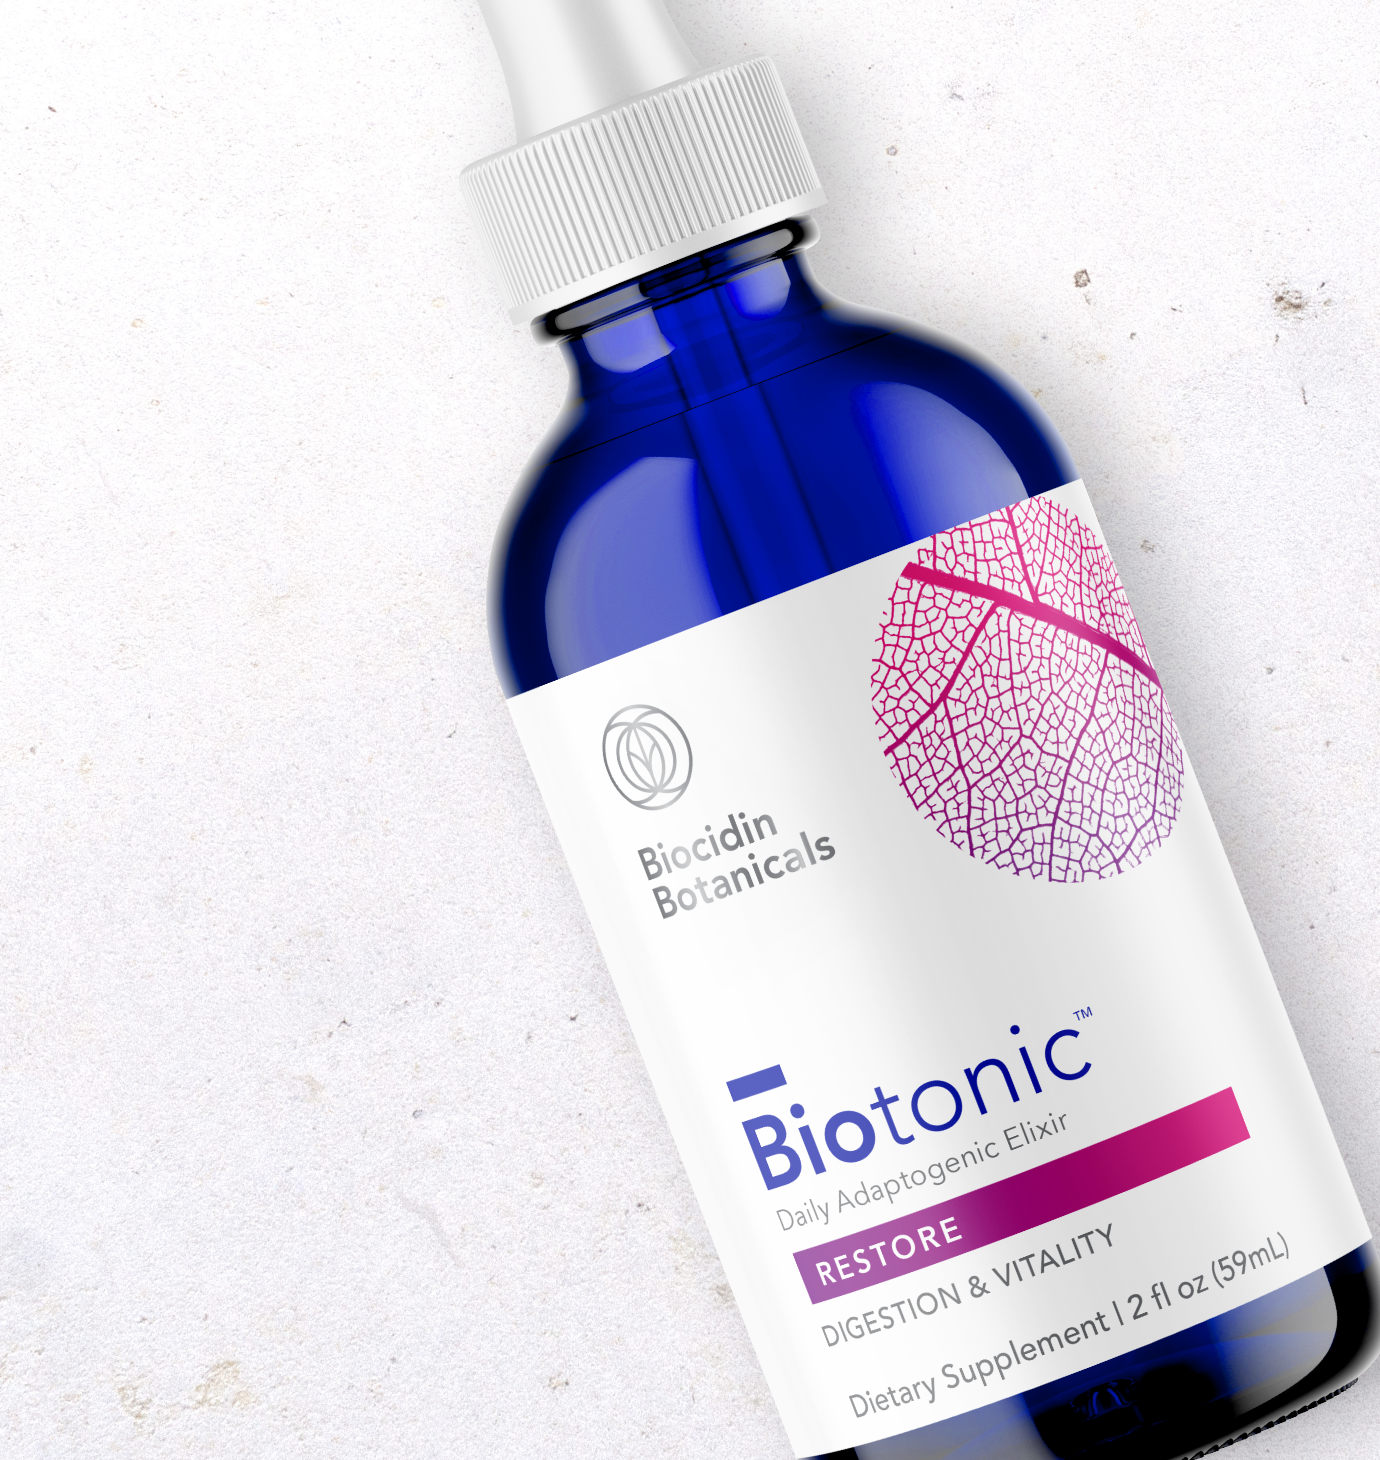 Biocidin_Botanicals_Biotonic_Packaging